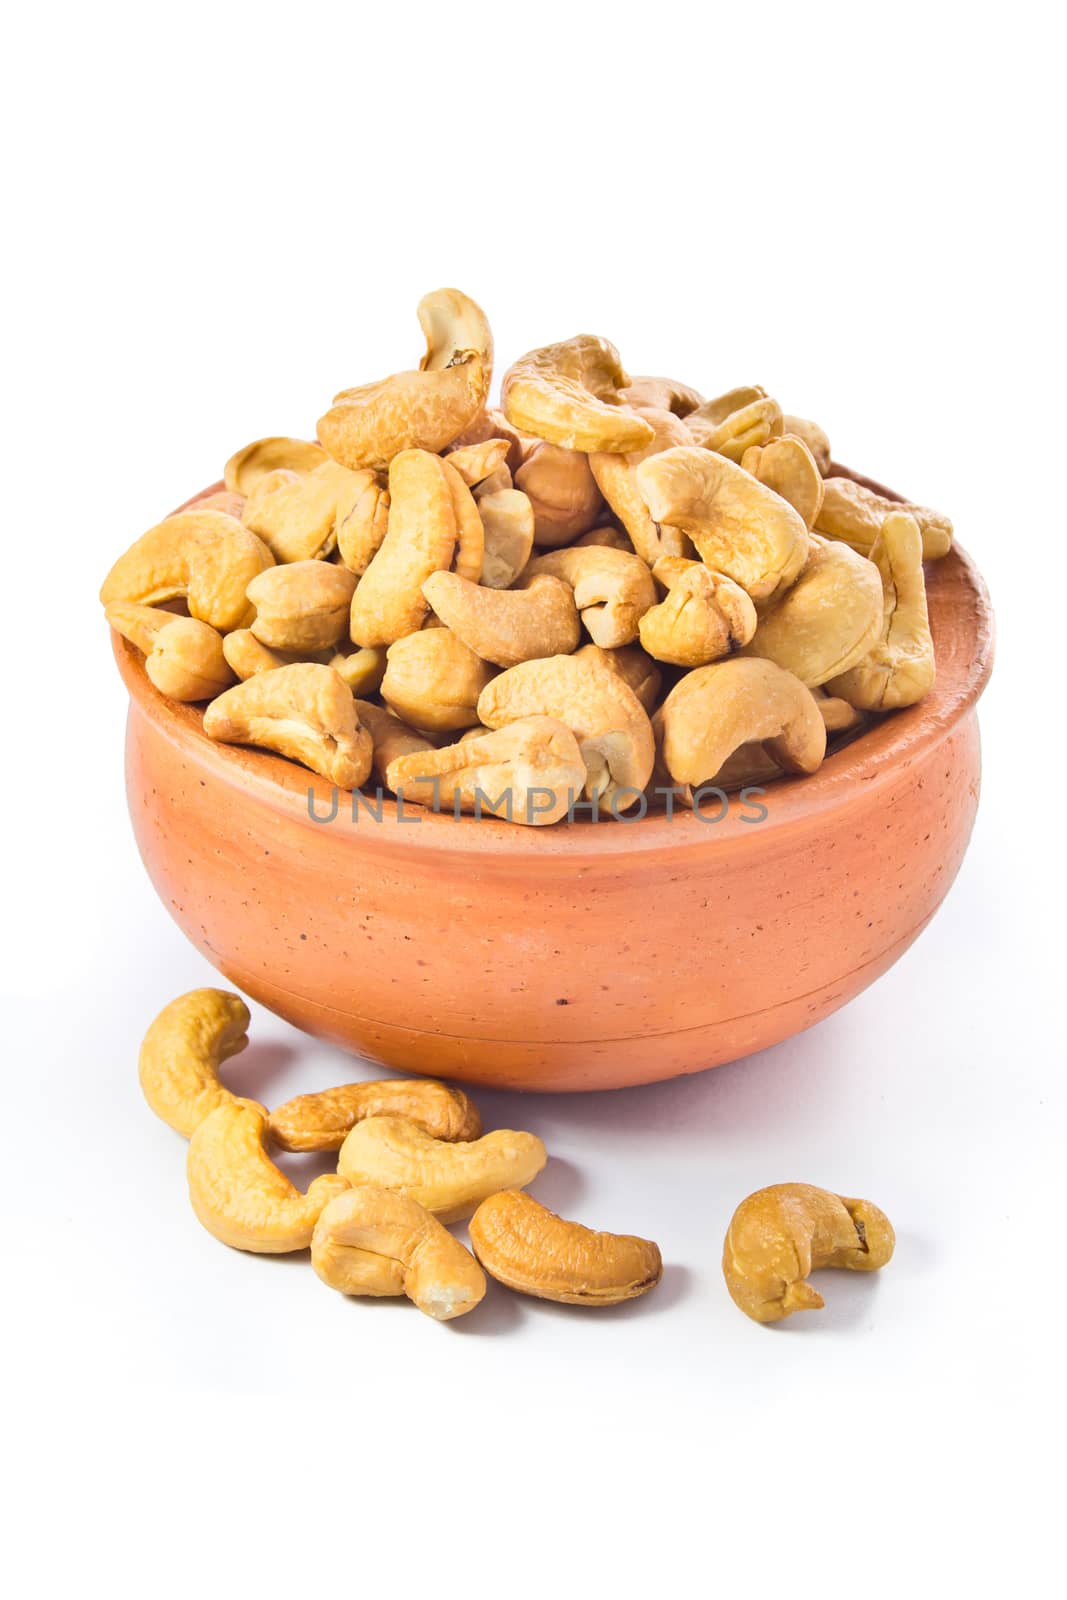 cashews nut in bowl on white background  by tisskananat